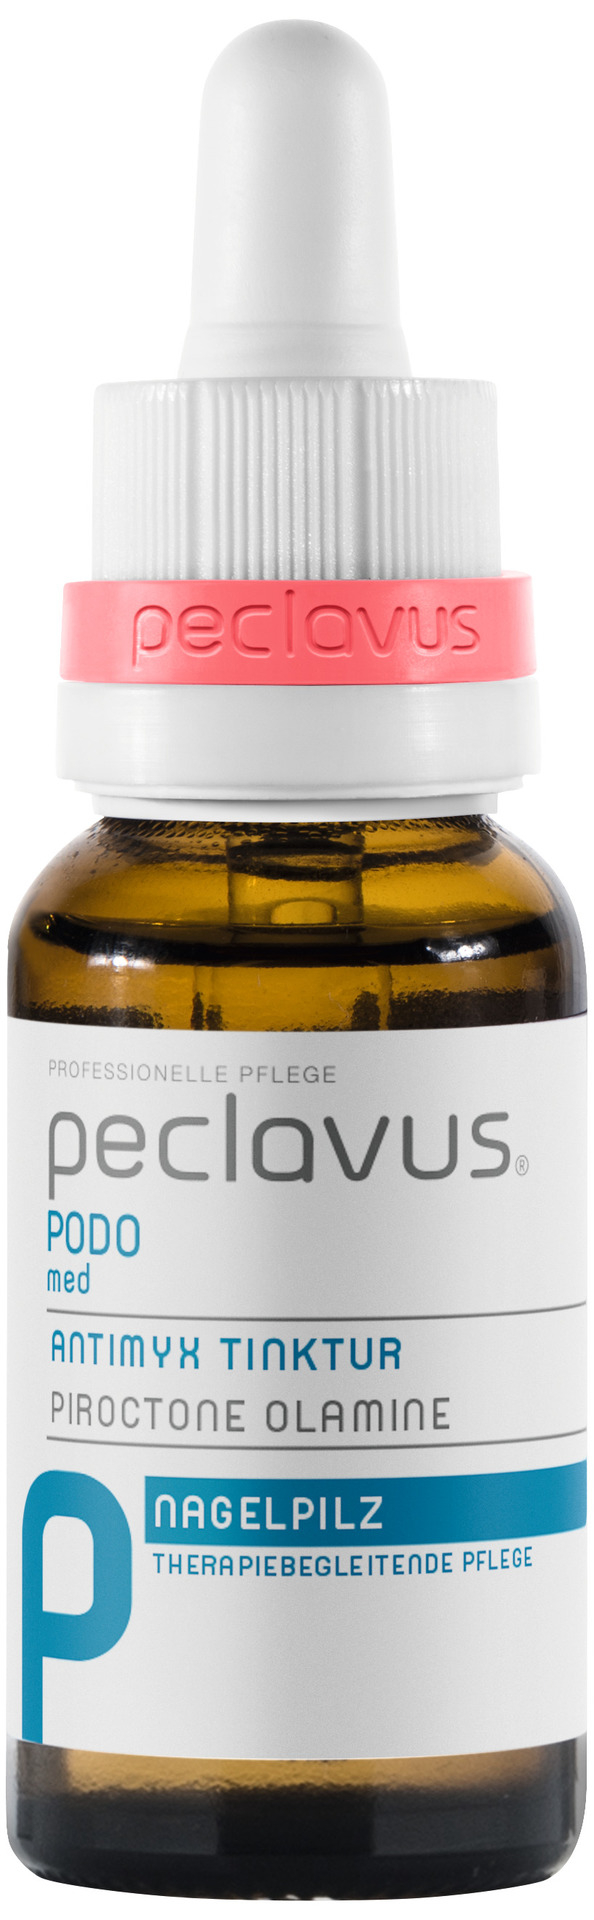 Peclavus  PODOmed AntiMYX Tinktur | 20 ml